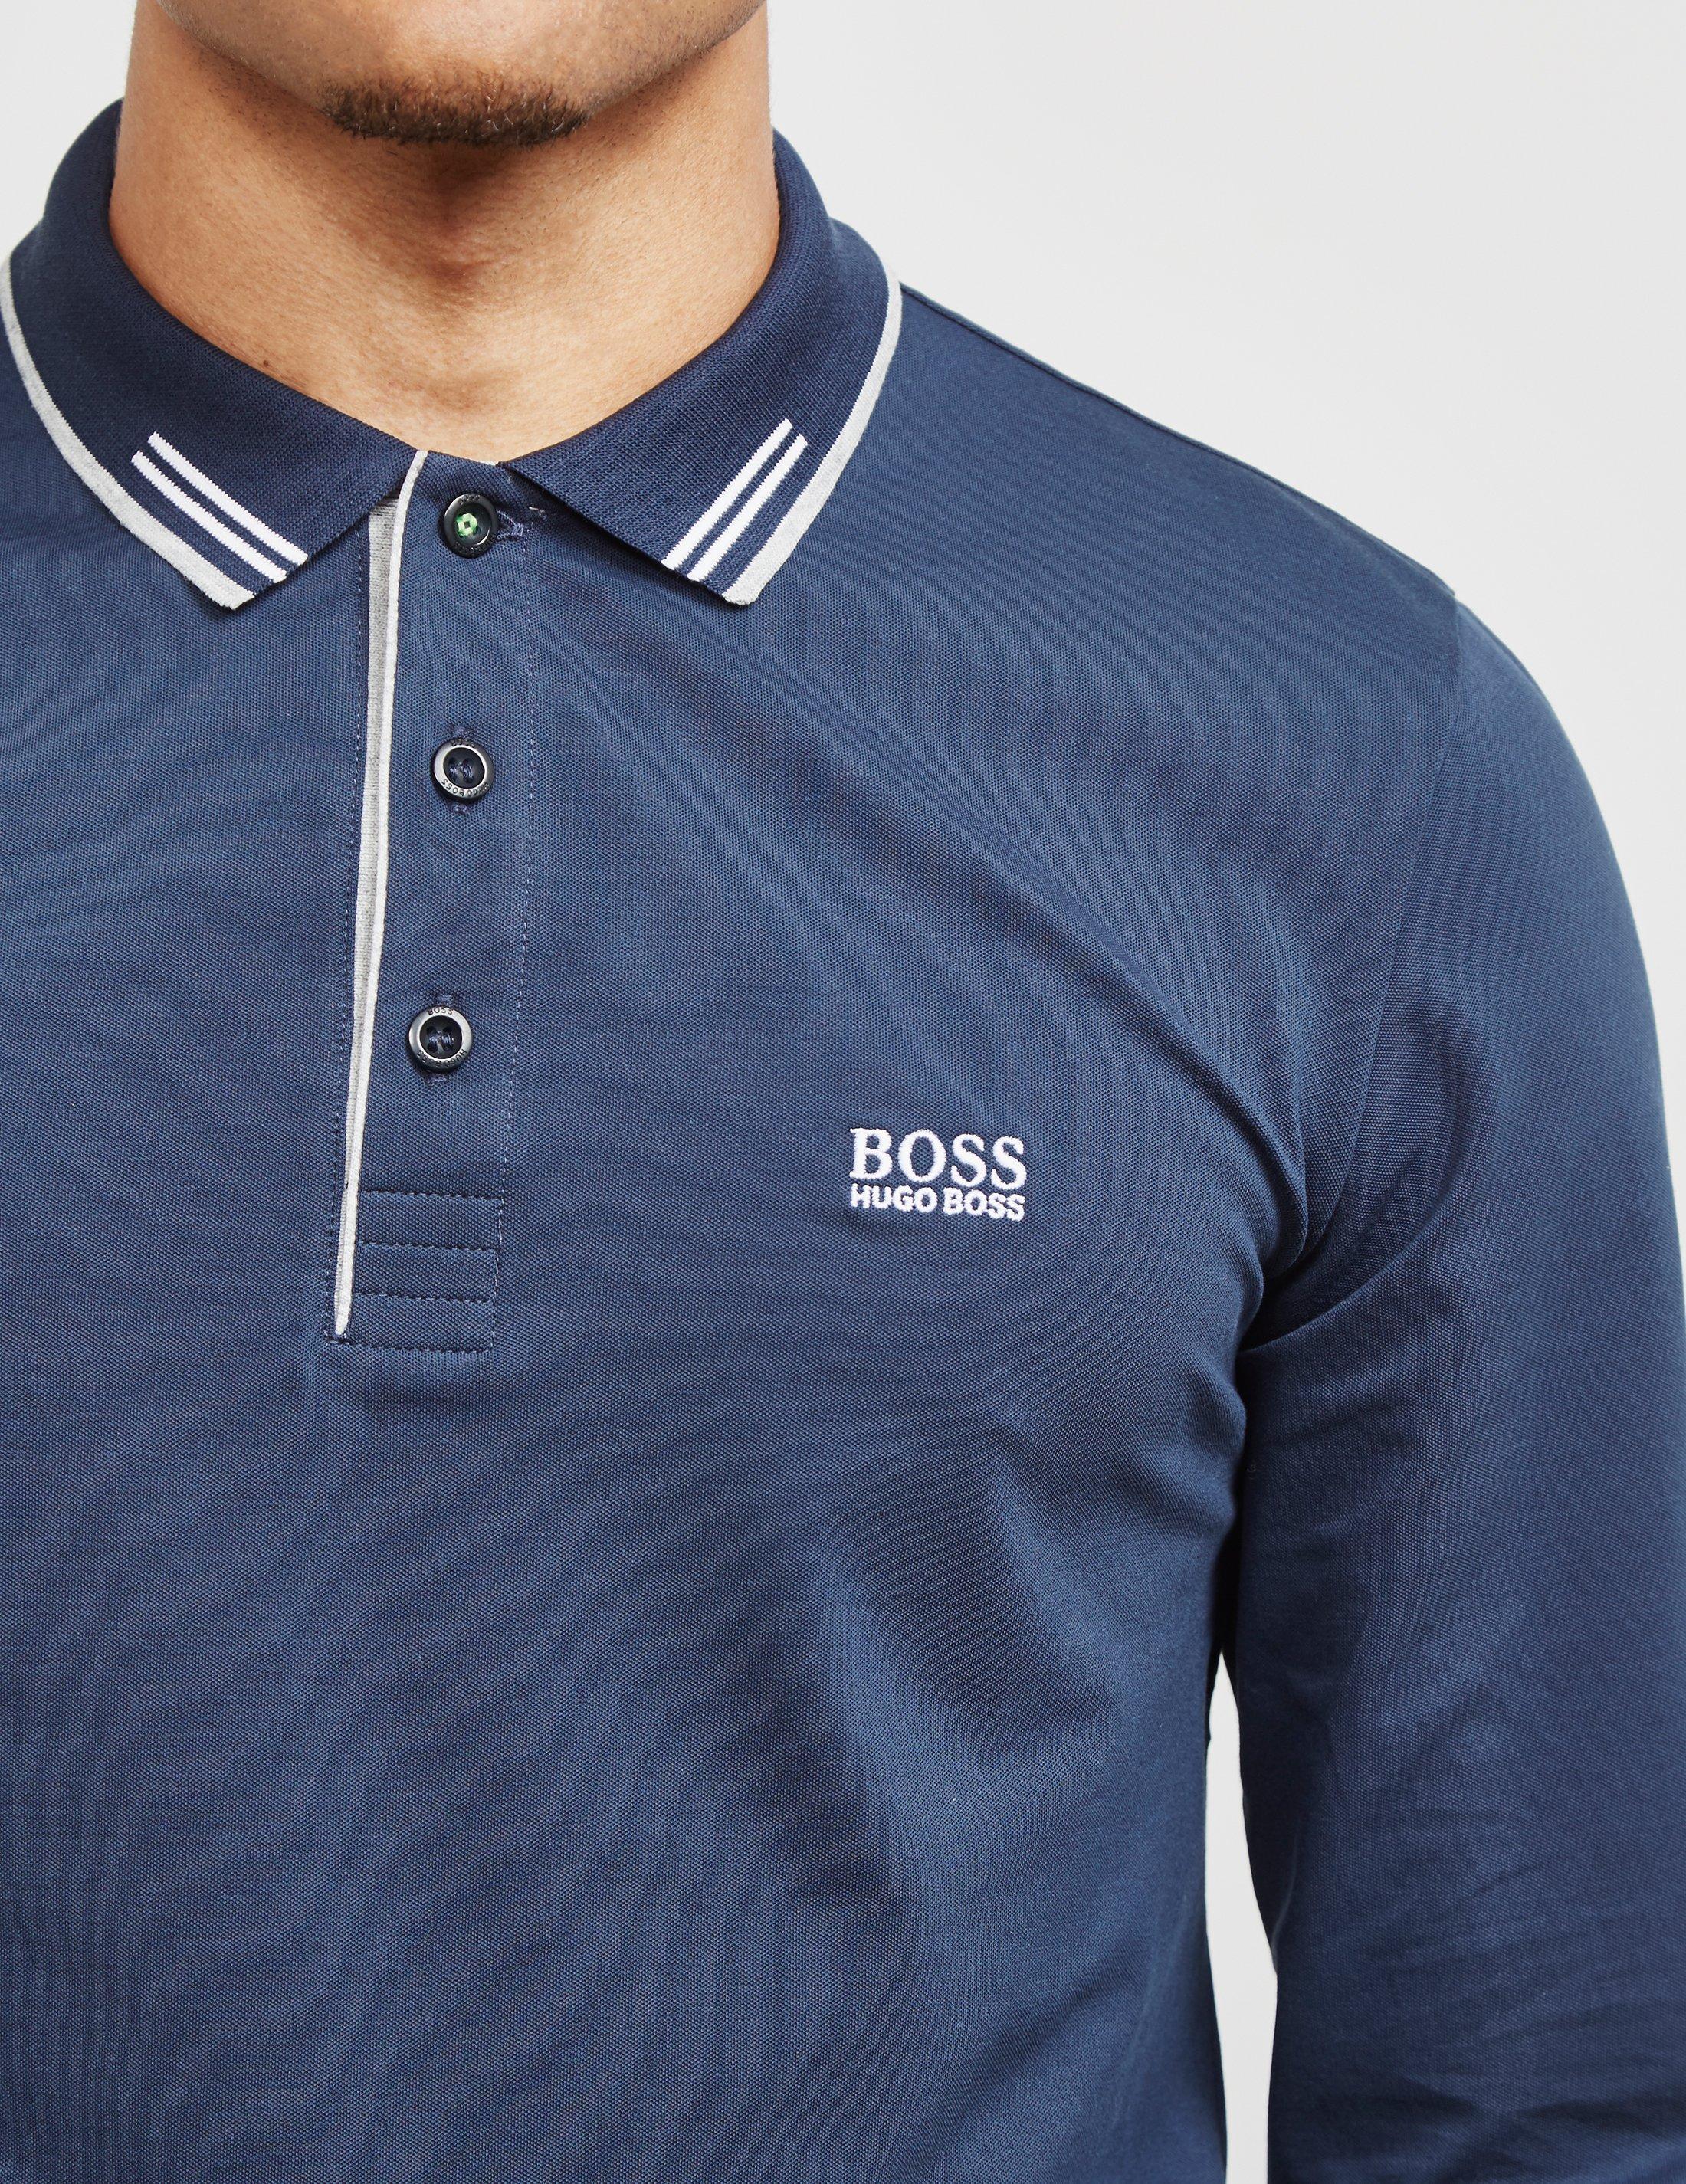 kulhydrat Sodavand jævnt BOSS by HUGO BOSS Cotton Paulson Long Sleeve Polo Shirt Navy Blue for Men -  Lyst